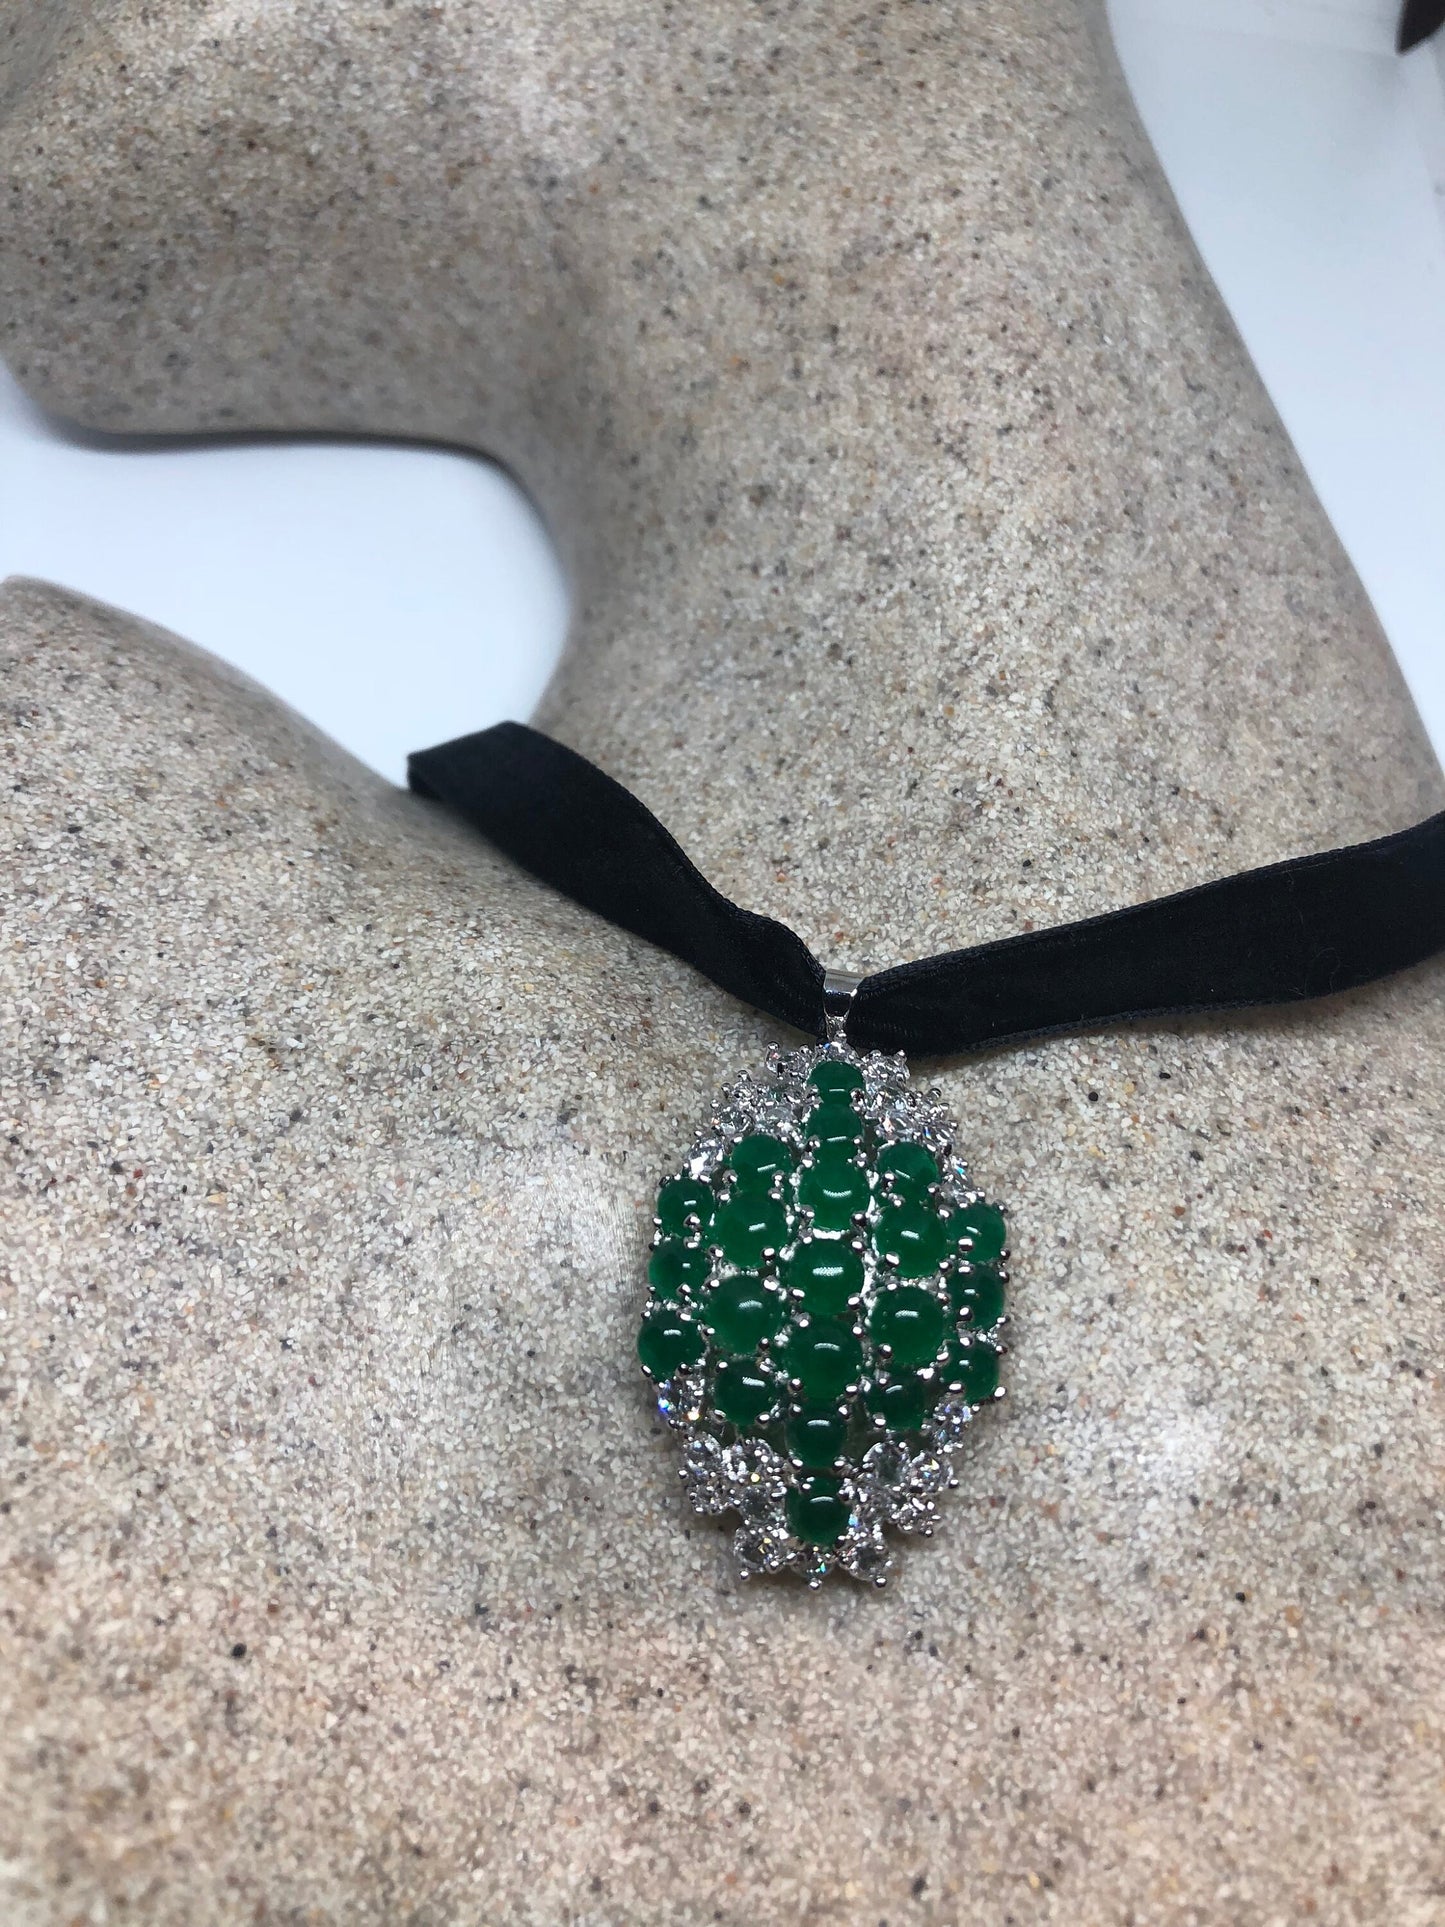 Vintage Green Jade Choker Silver Finish Necklace Pendant